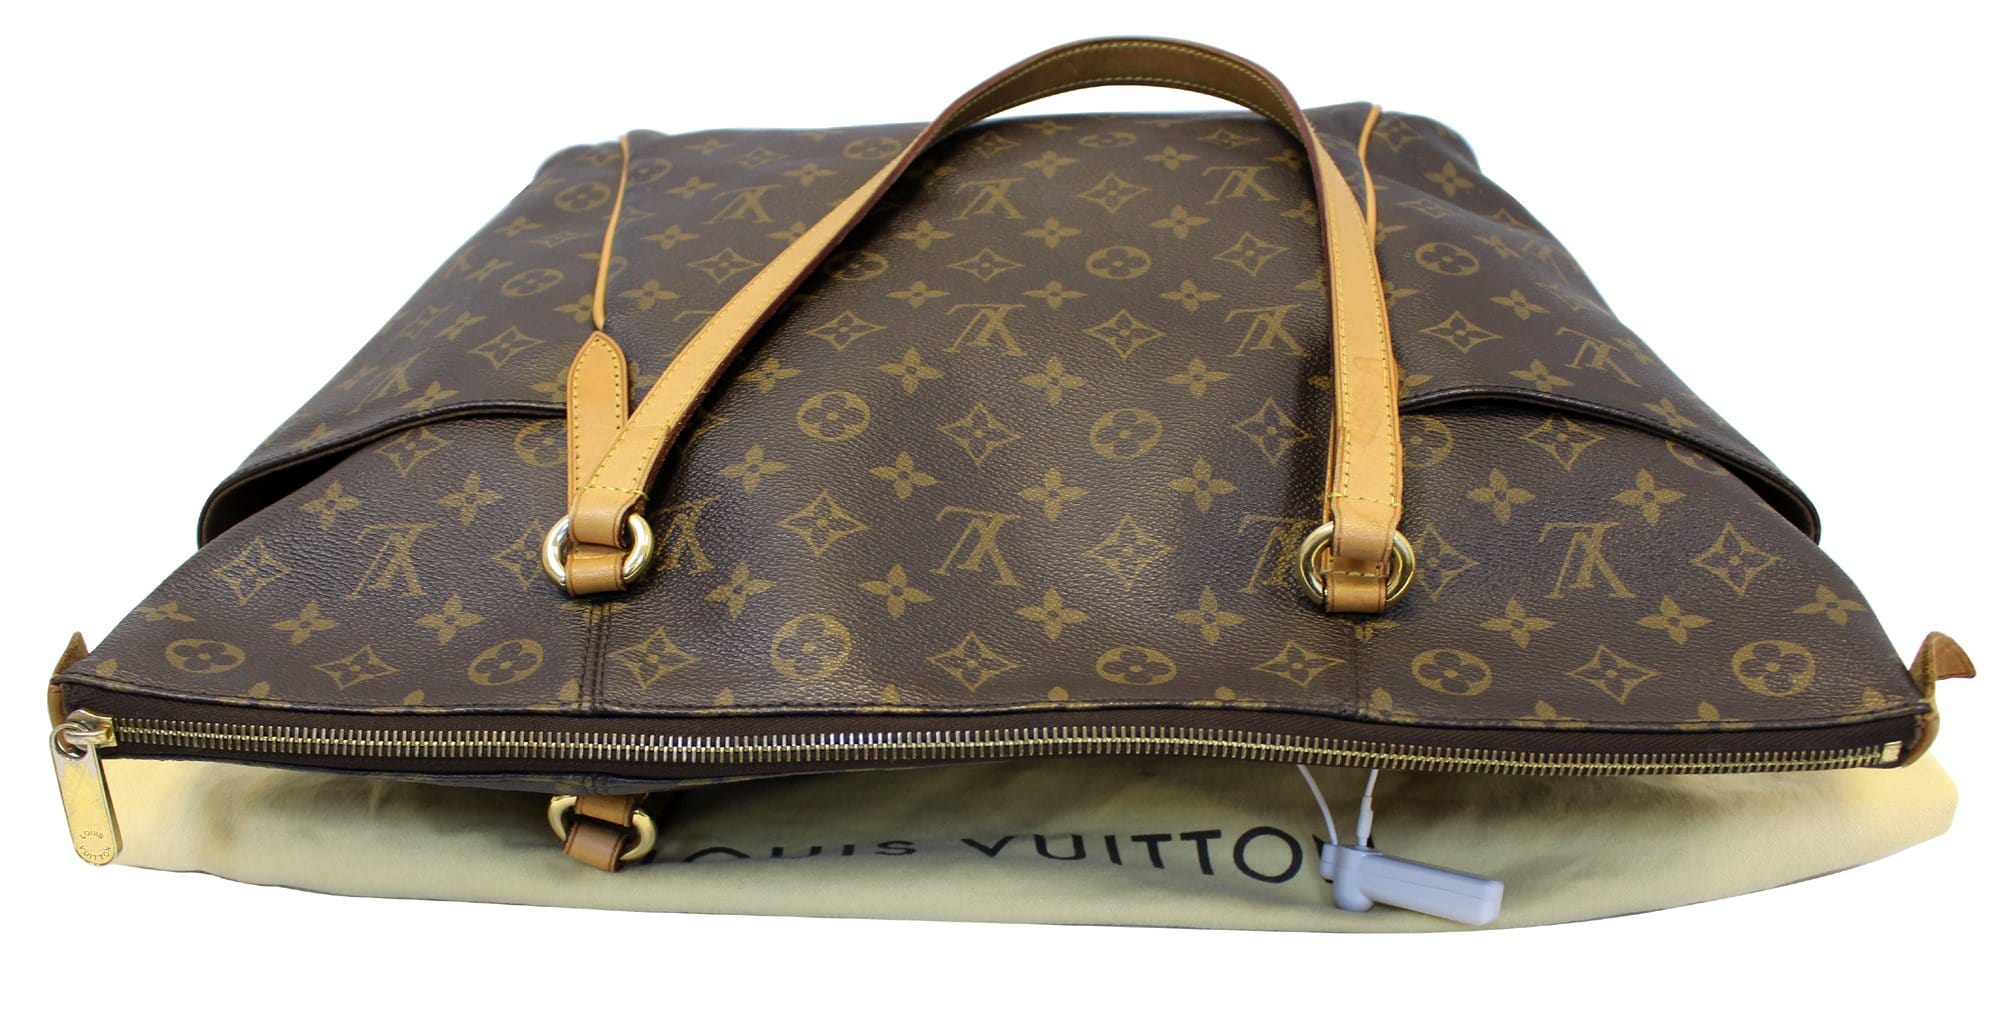 LOUIS VUITTON Monogram Totally Gm Tote Shoulder Bag